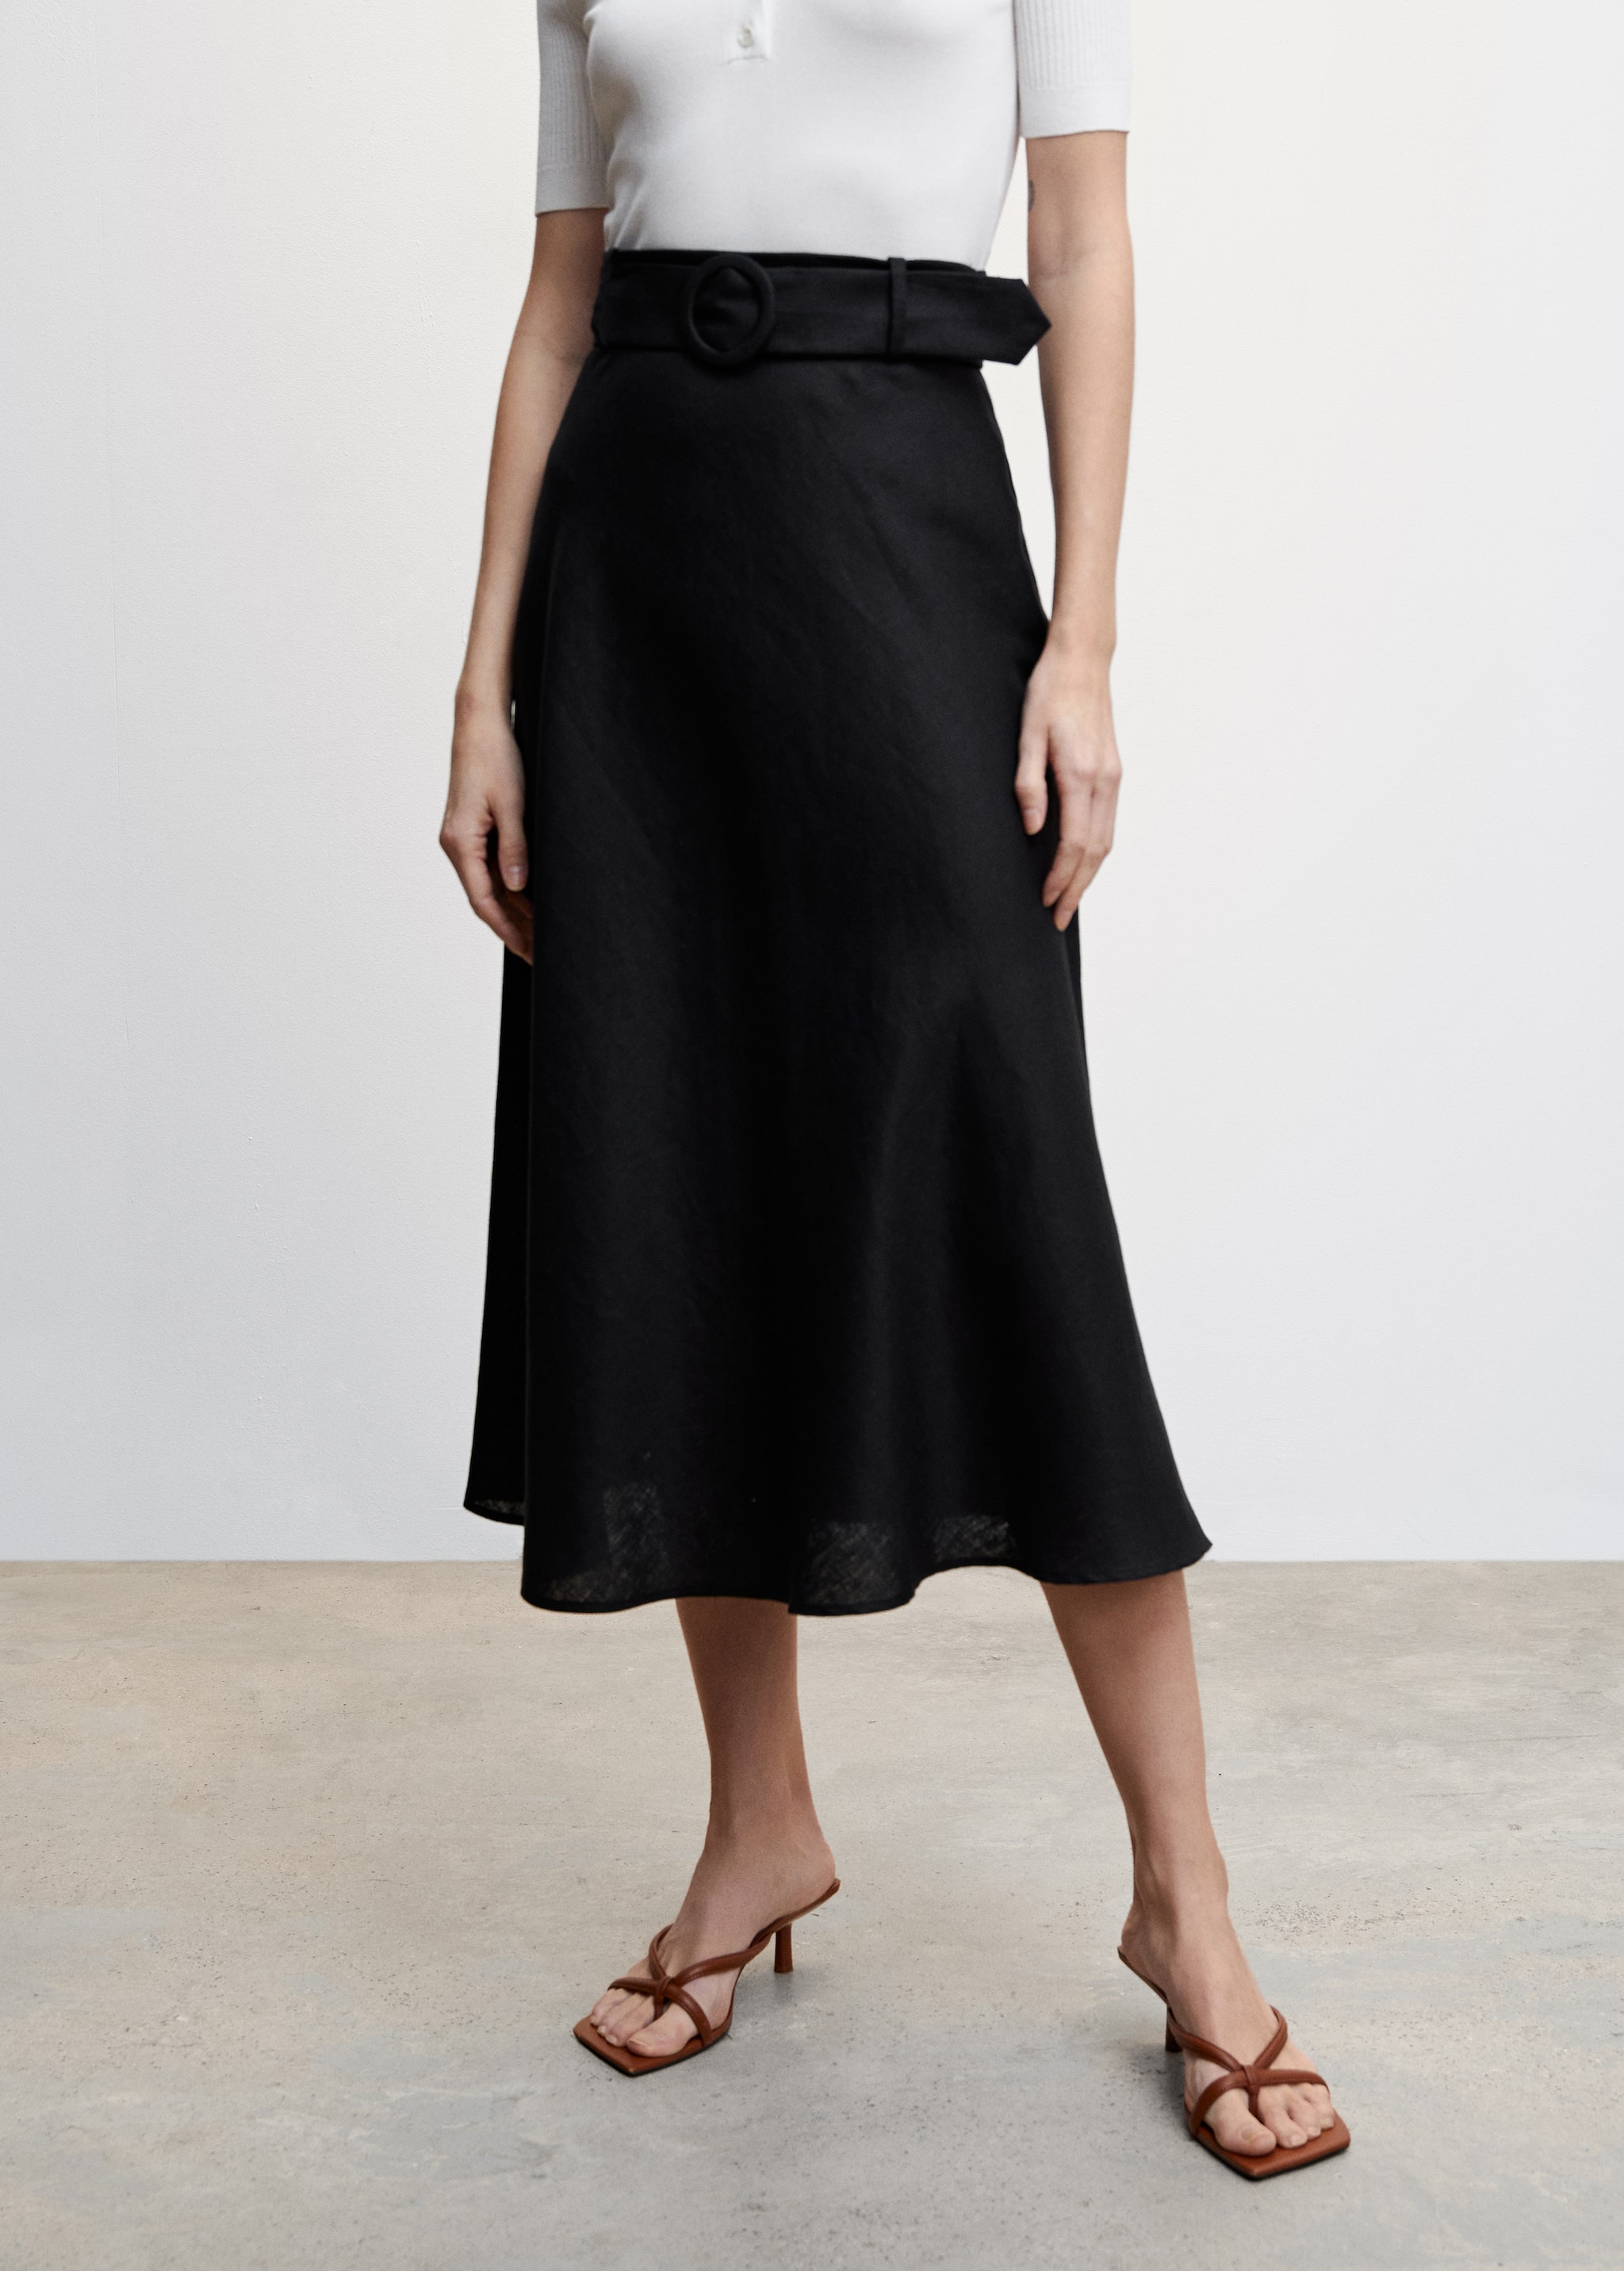 Linen skirt with belt - Medium plane